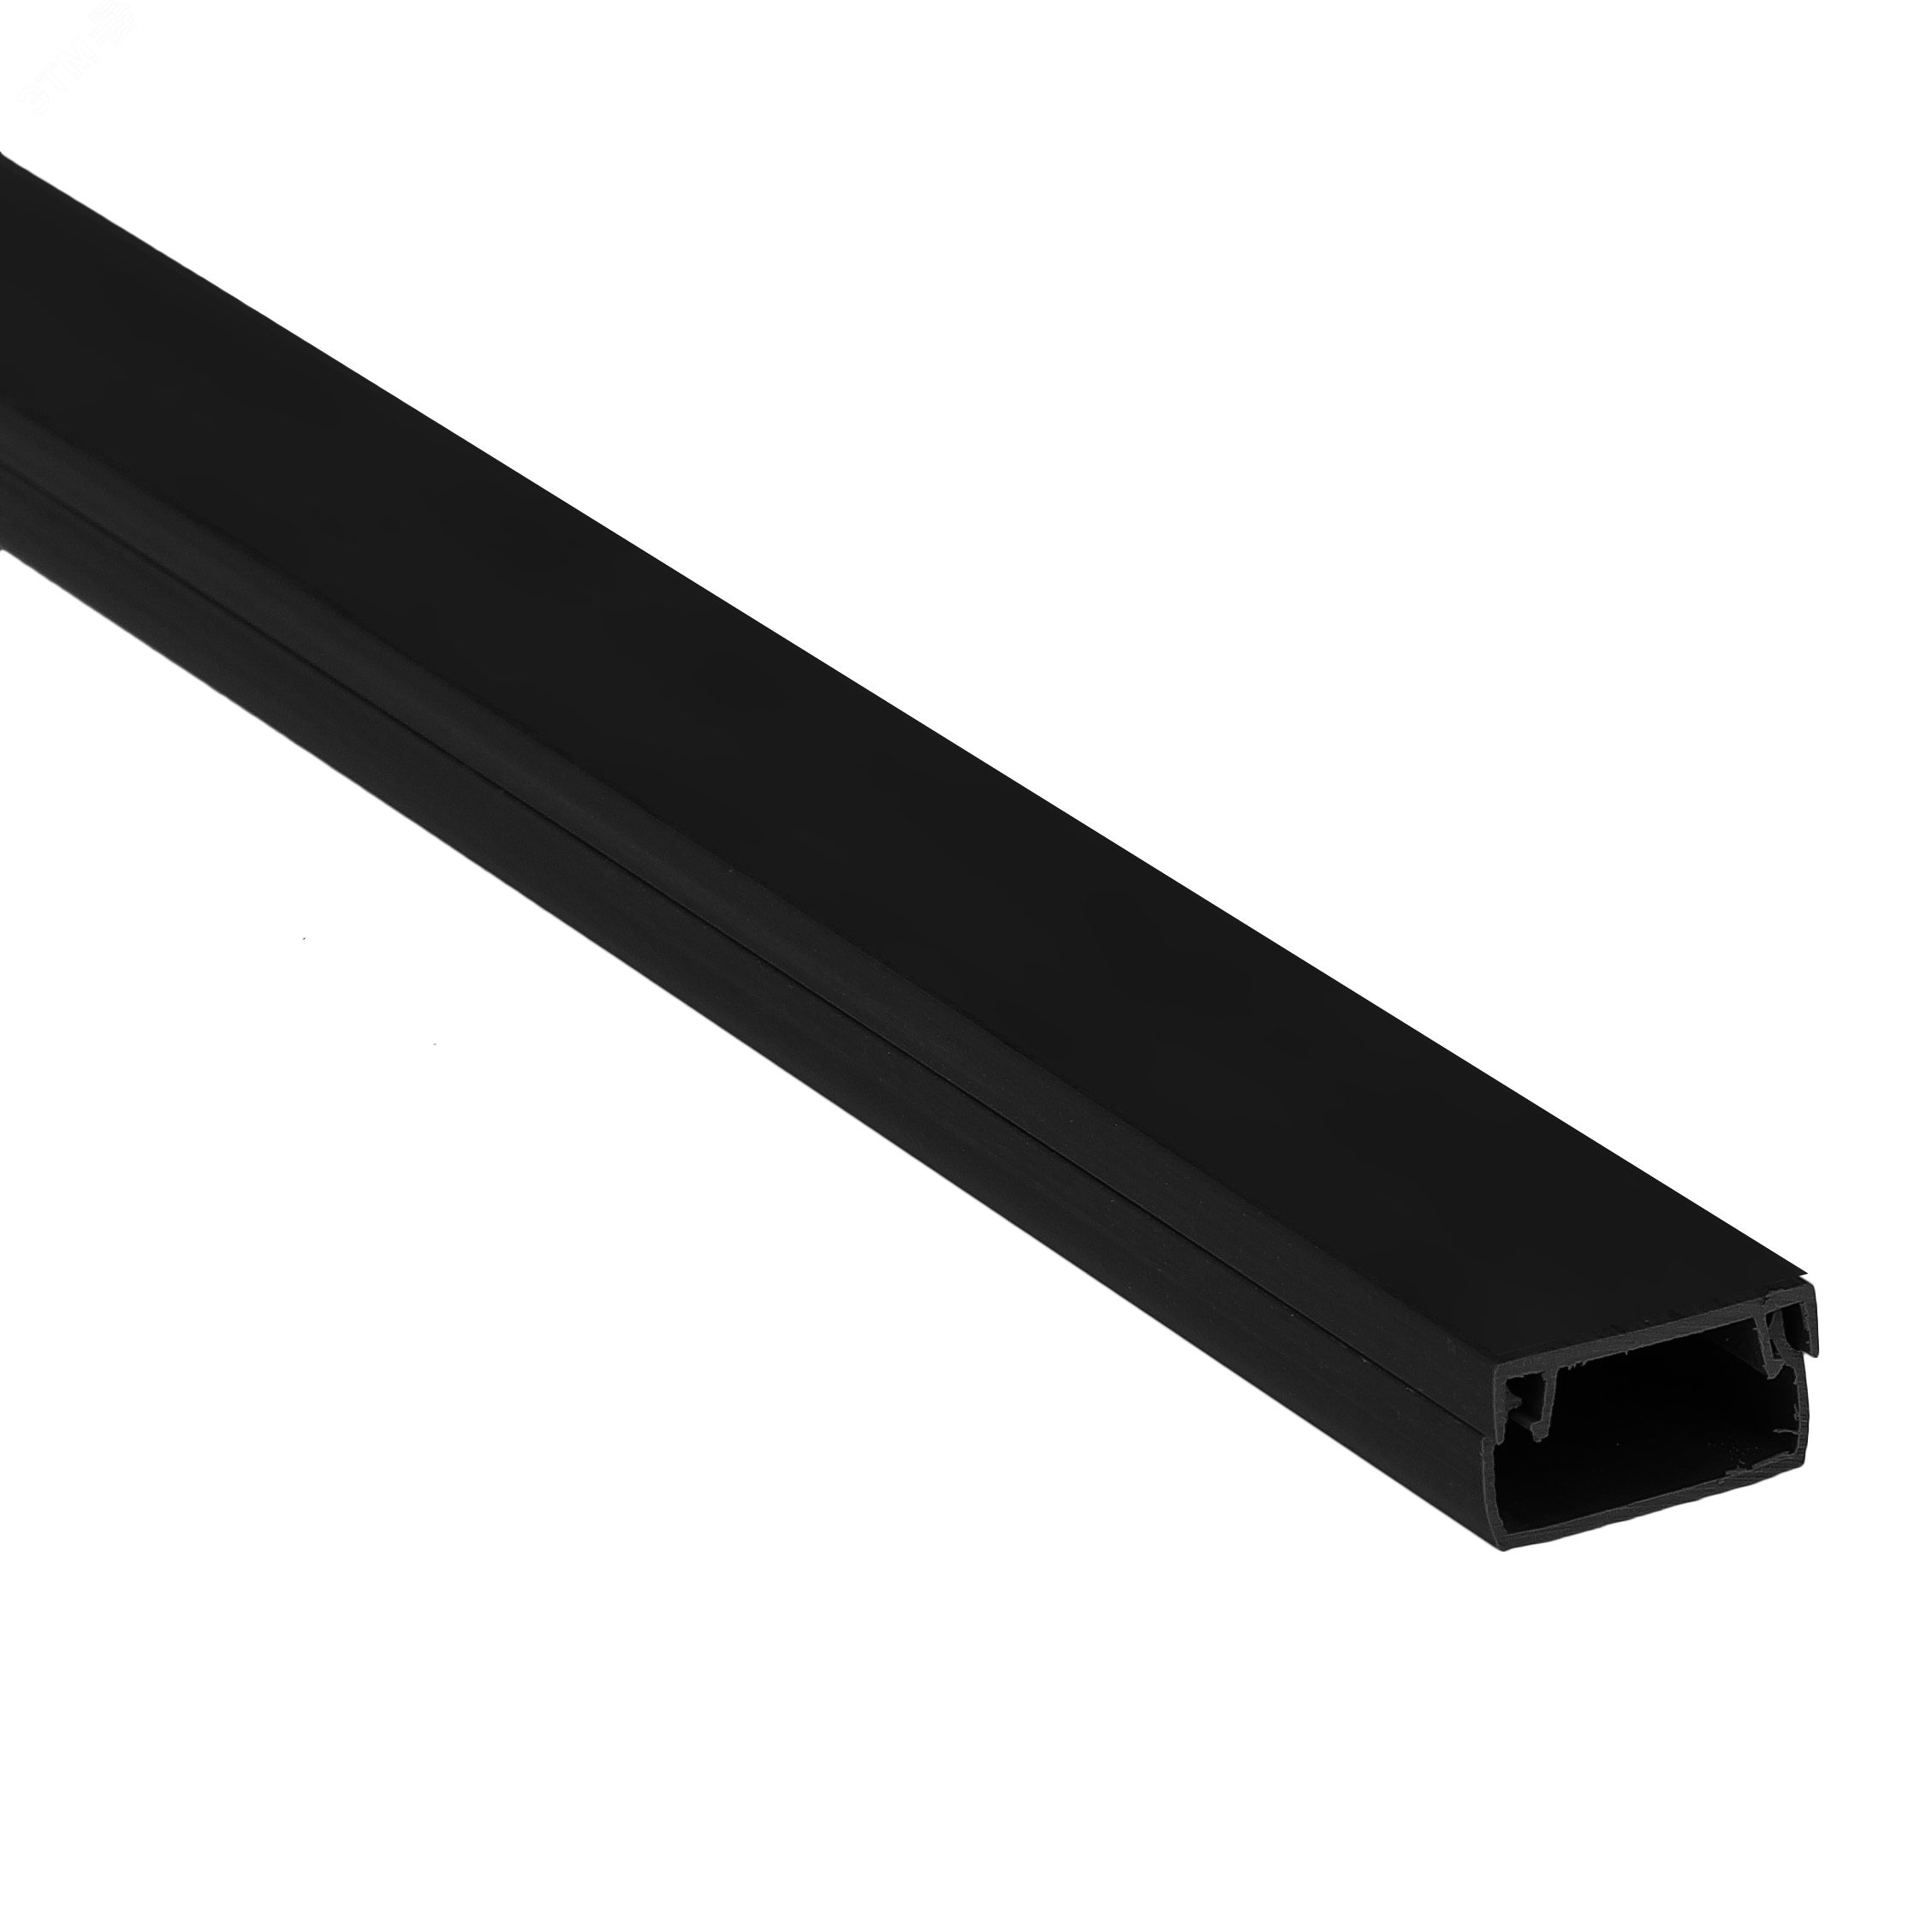 Канал кабельный (20х10) (96 м) черный -Plast kk-20-10b EKF